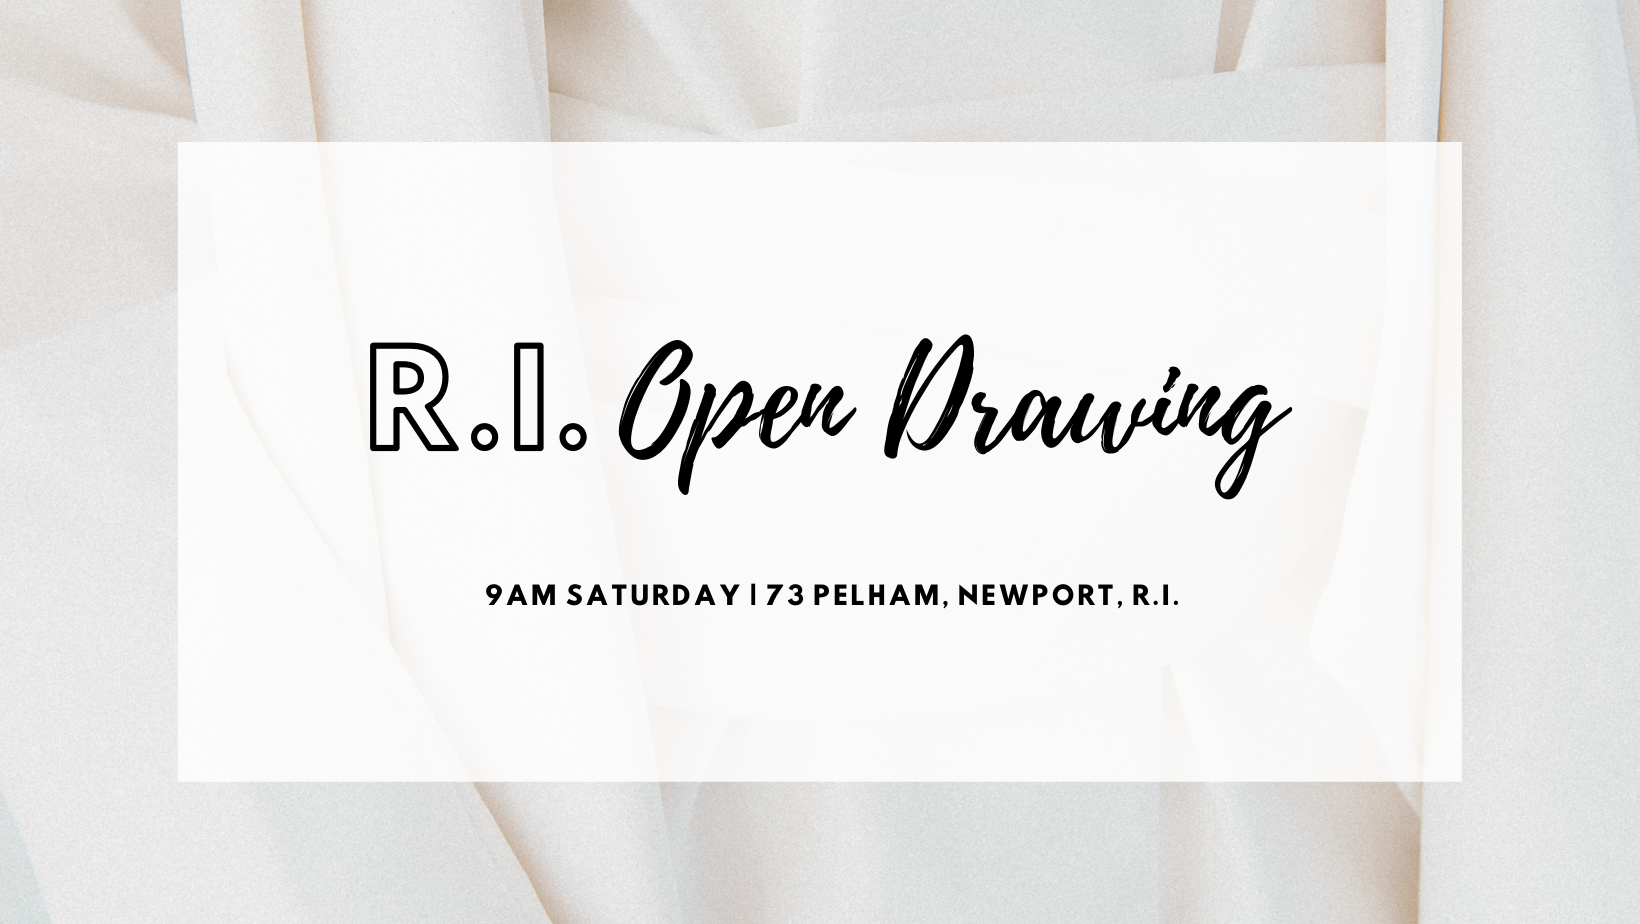 RI-Opening-Drawing5.png